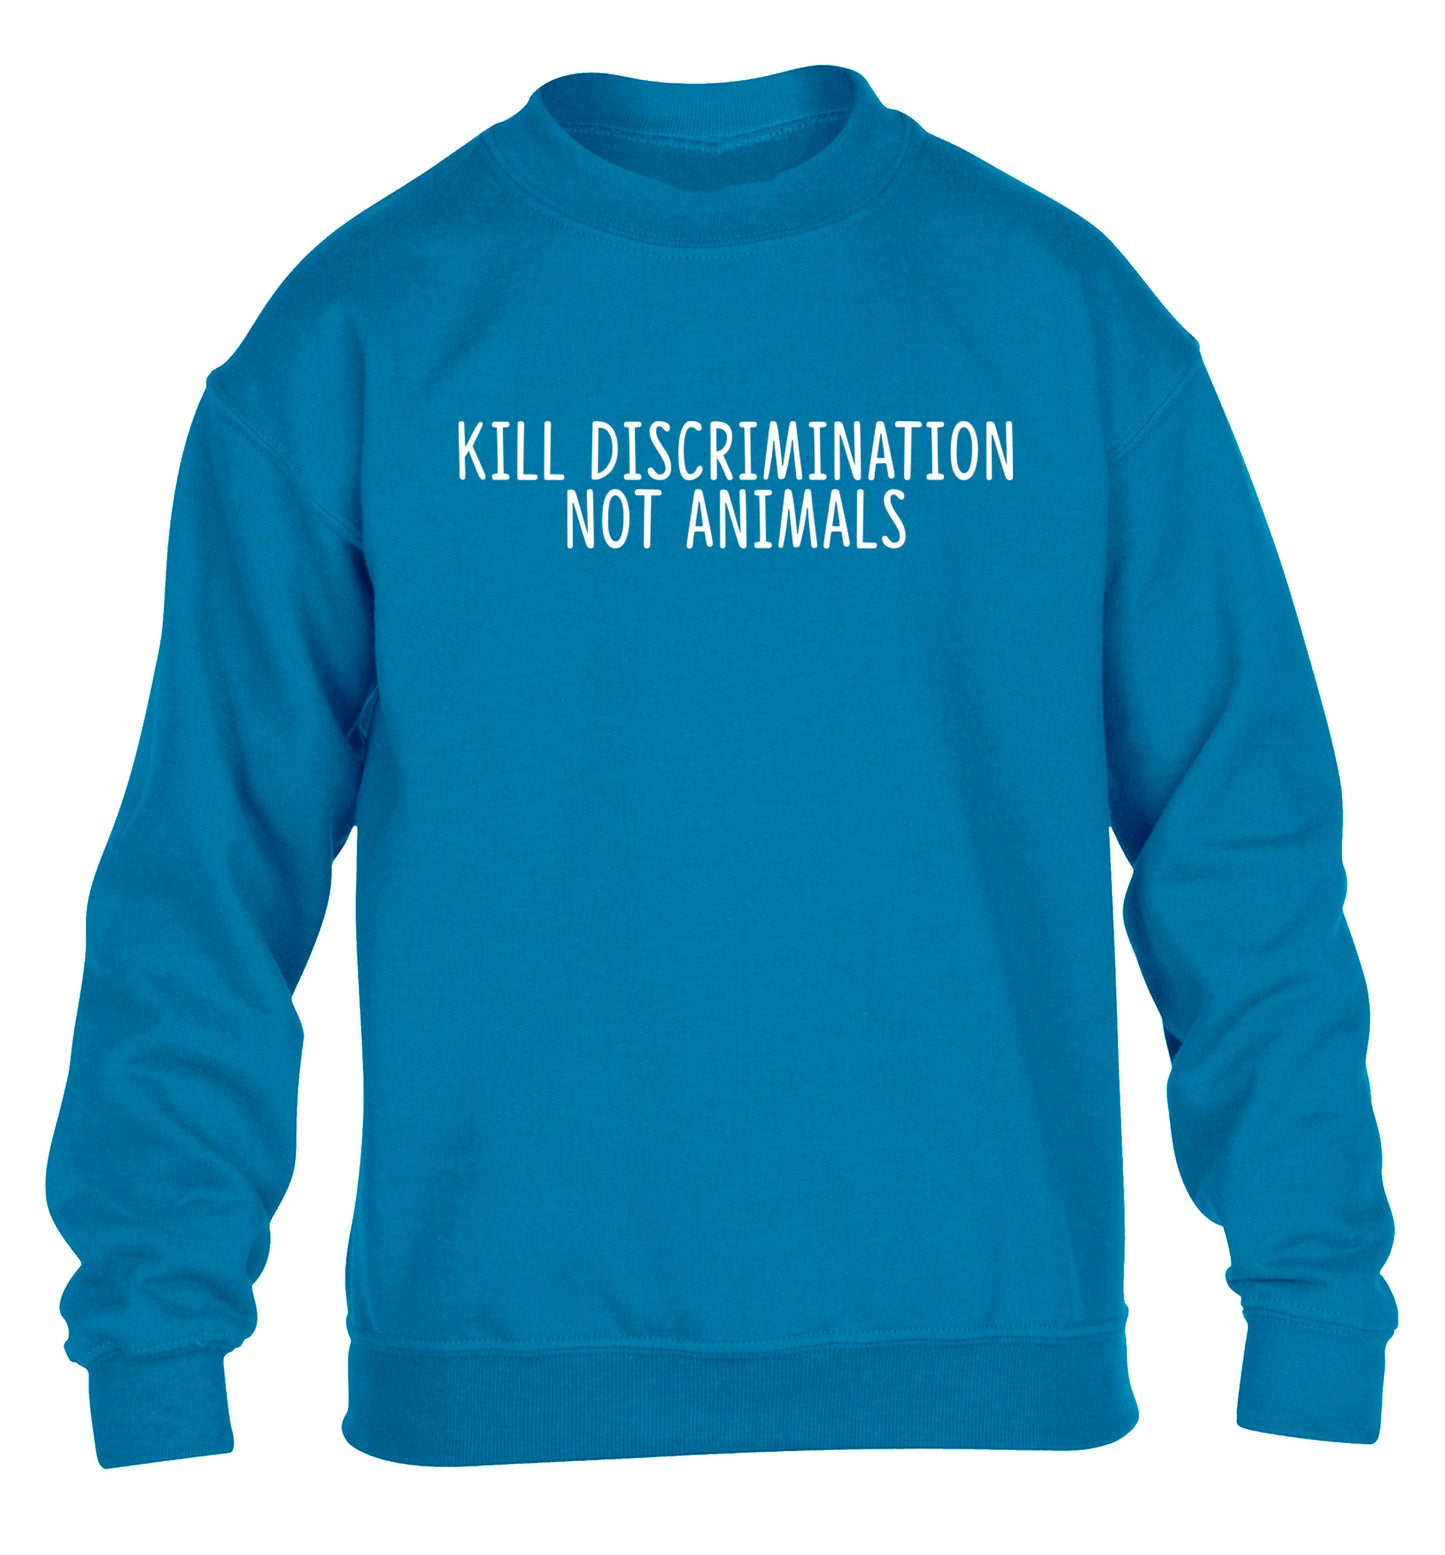 Kill Discrimination Not Animals children's blue sweater 12-13 Years